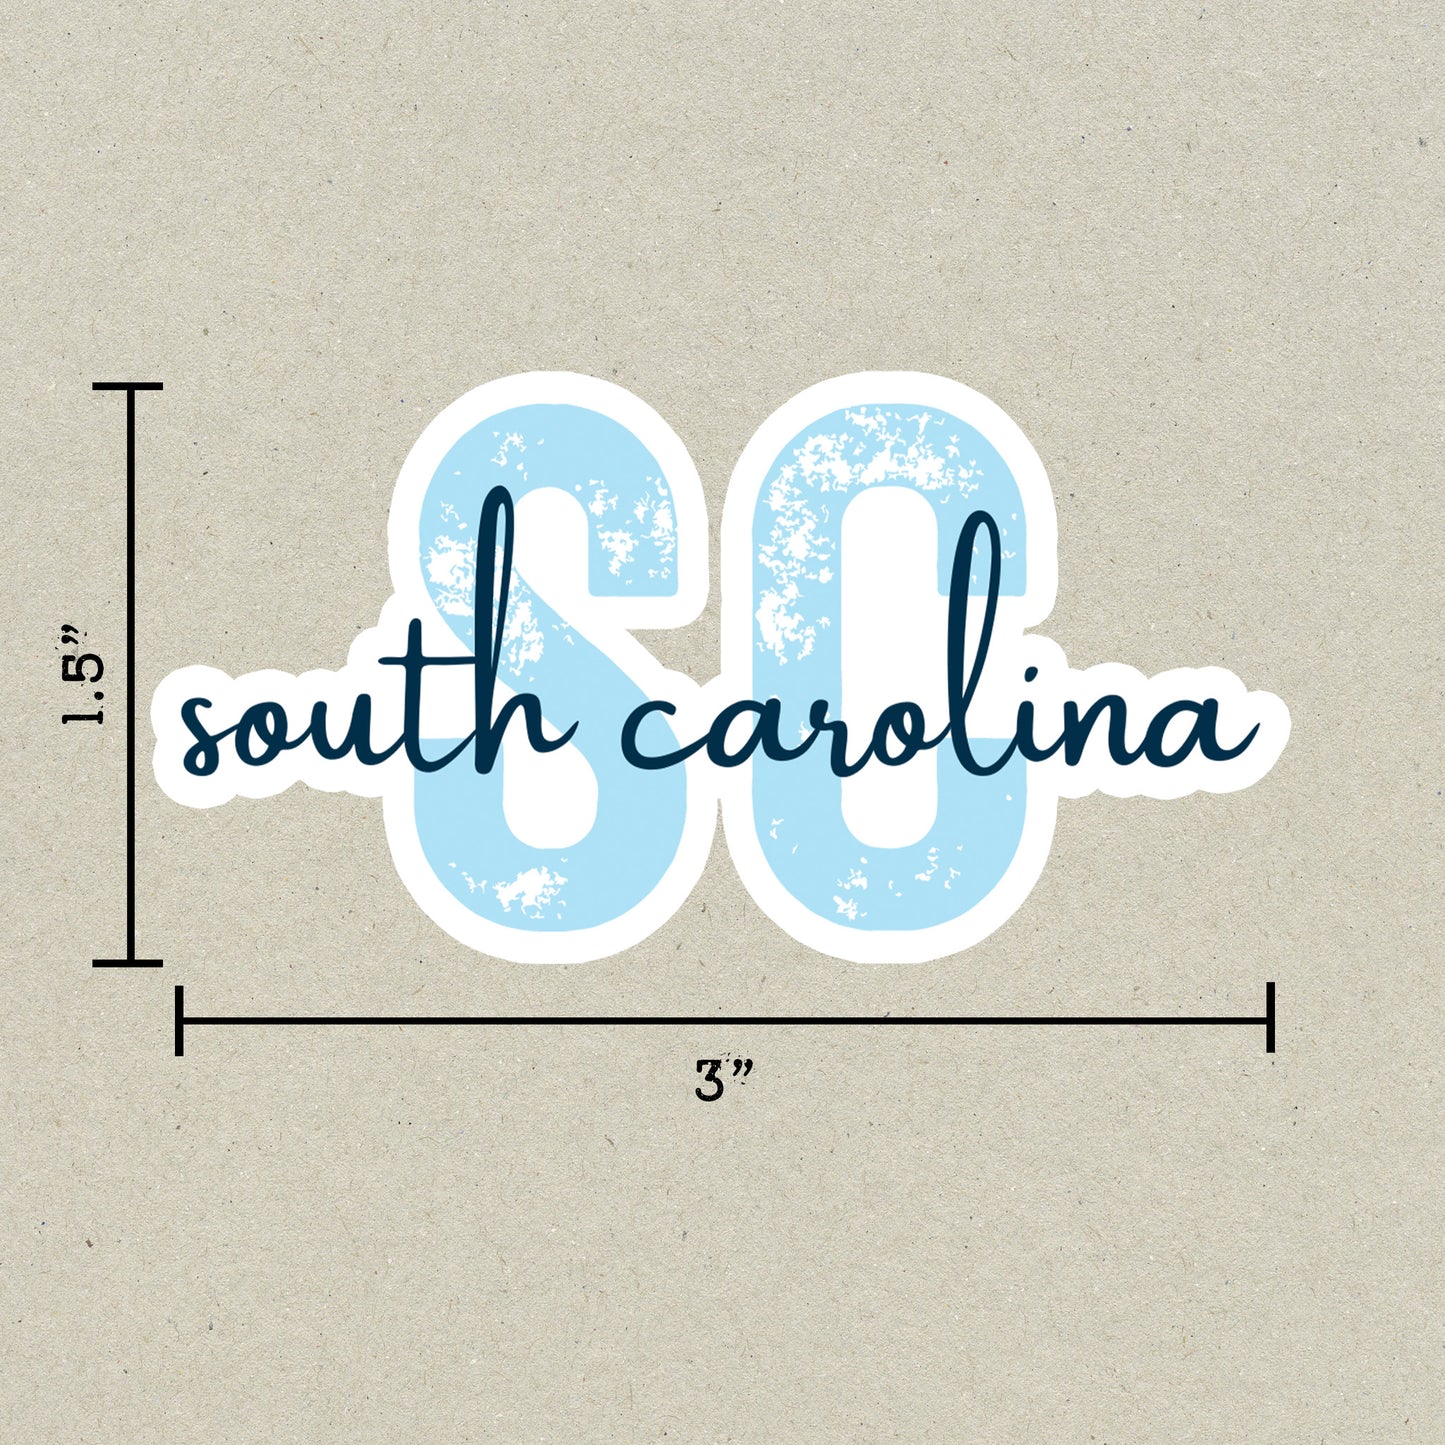 South Carolina State Code Sticker